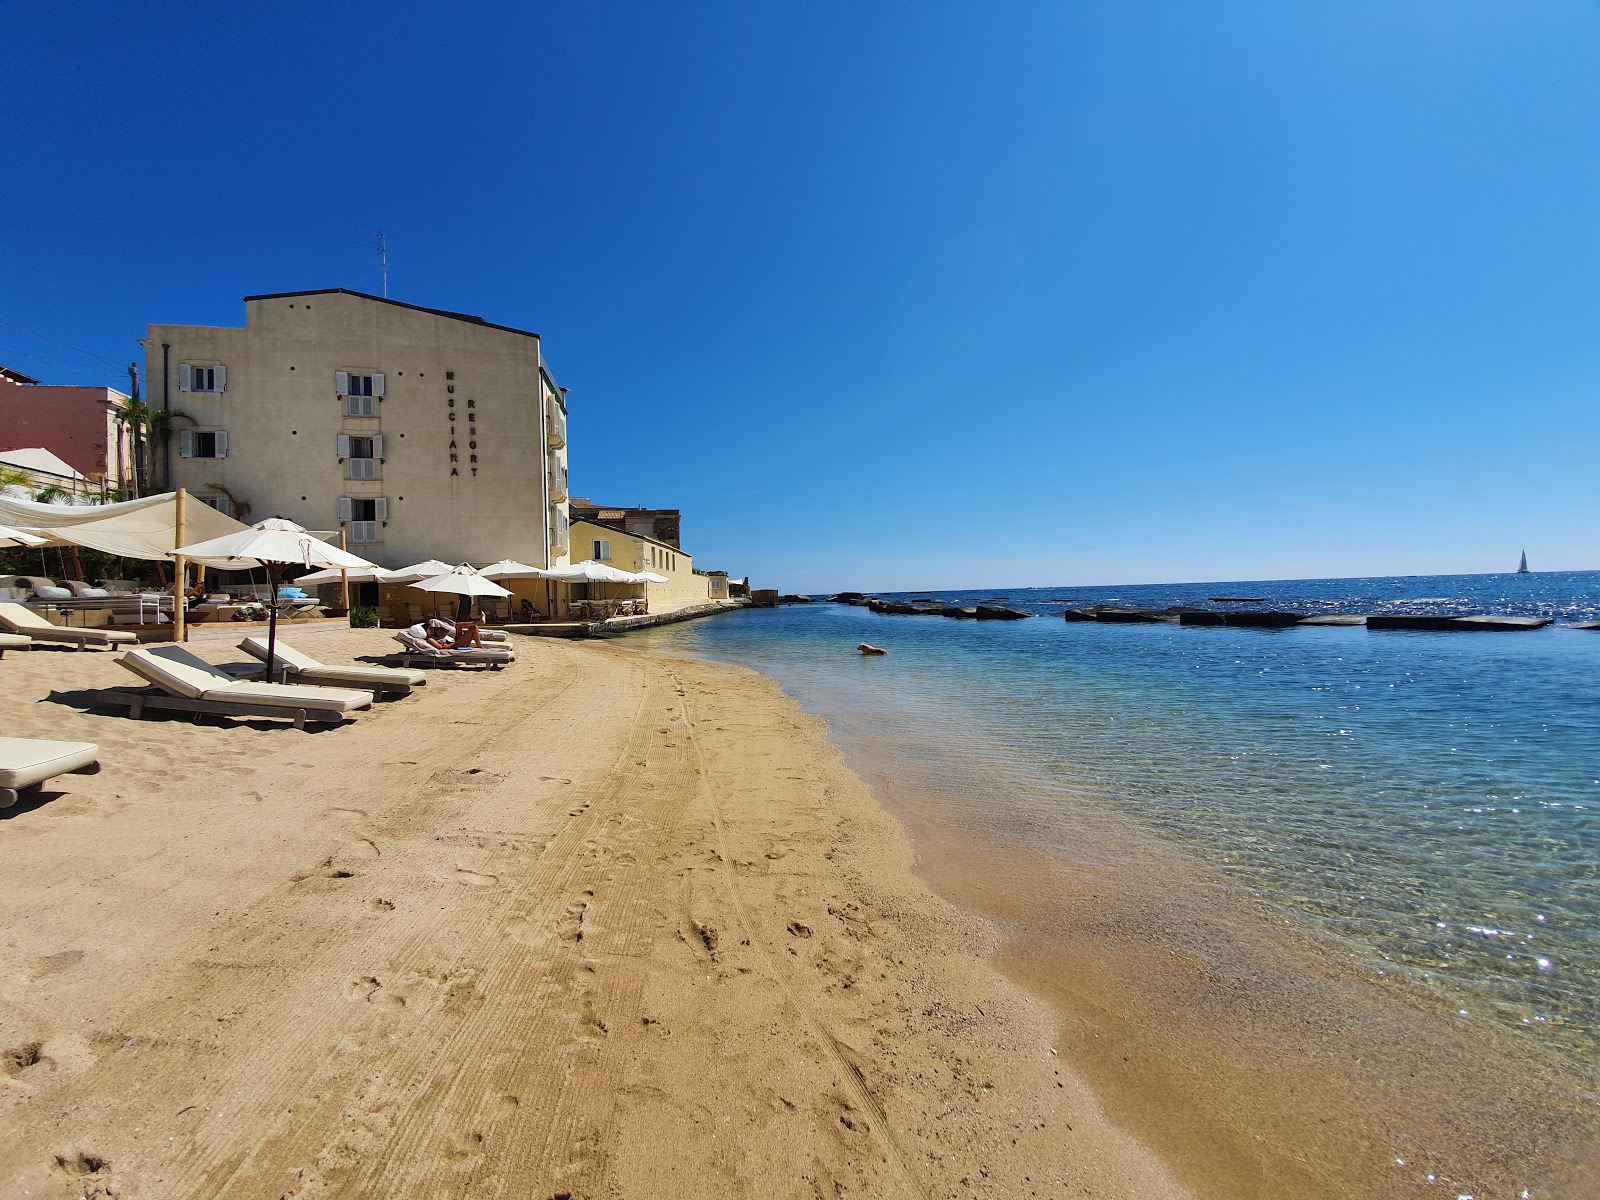 Fotografija Musciara Resort beach z turkizna čista voda površino